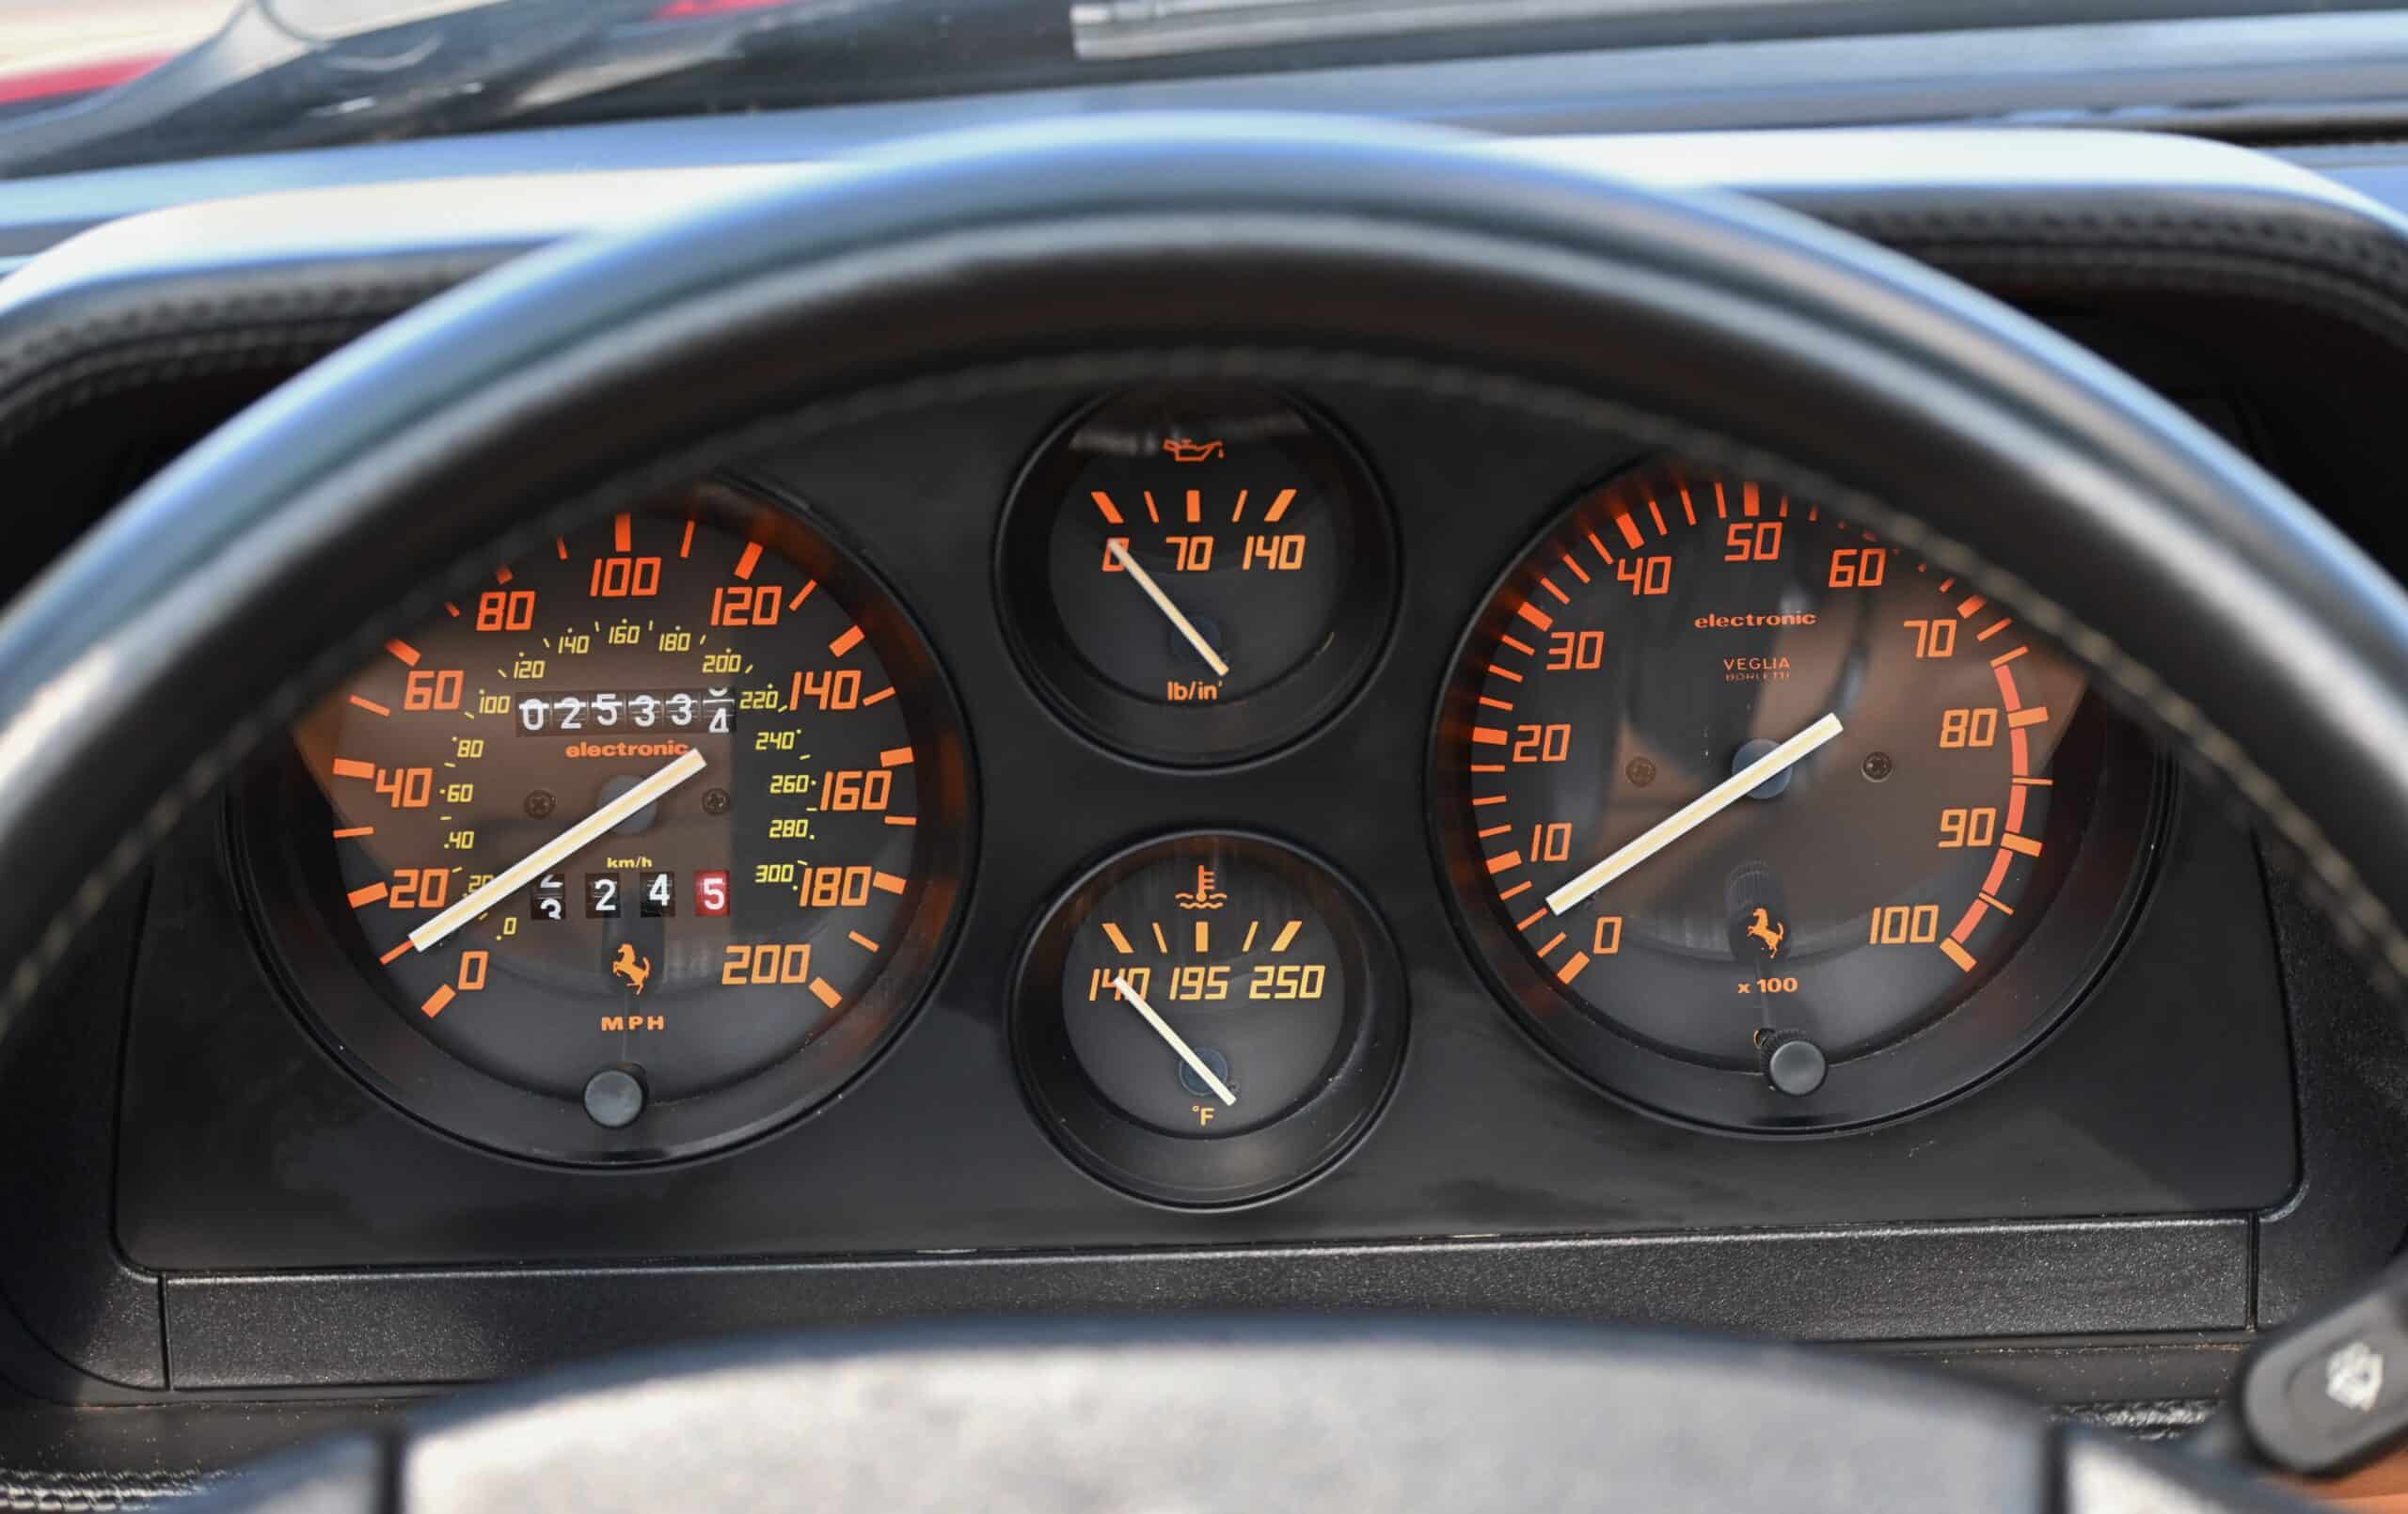 1995 Ferrari 348 Spider Gated 5 Speed Dogleg – Timing belt & clutch service done – Documented History